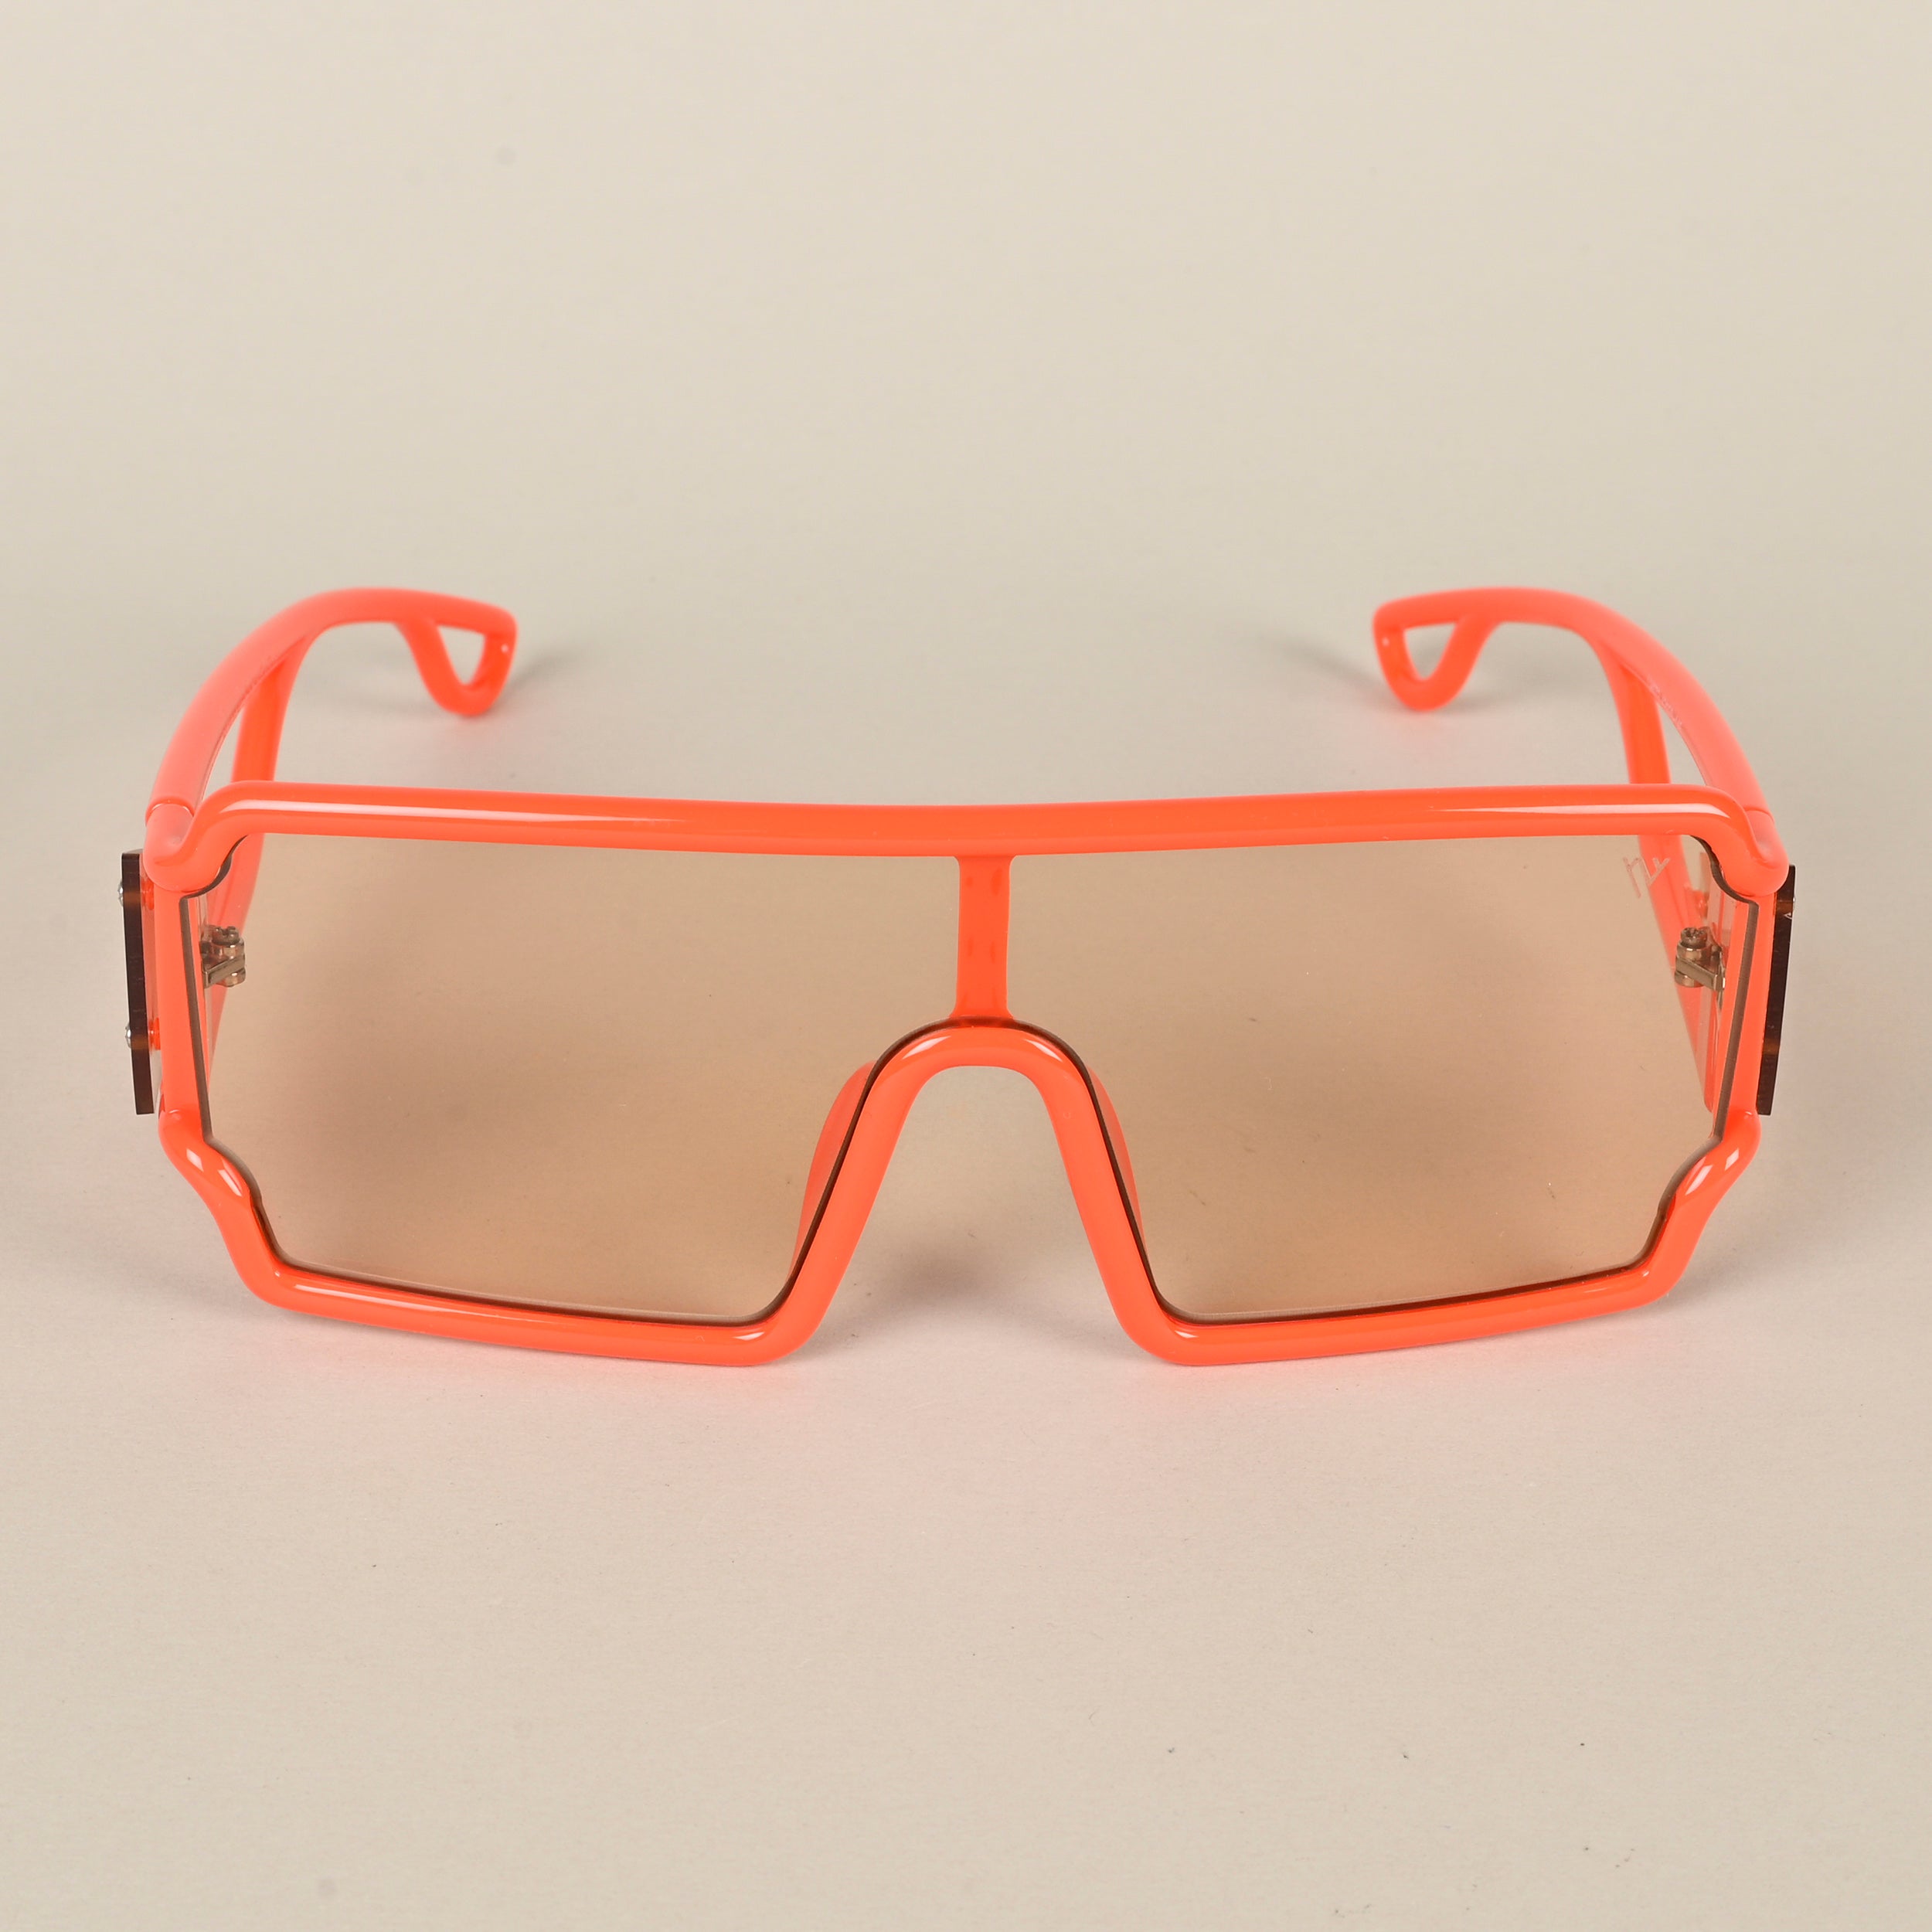 Voyage Orange Wayfarer Sunglasses for Men & Women (LH073MG4563)